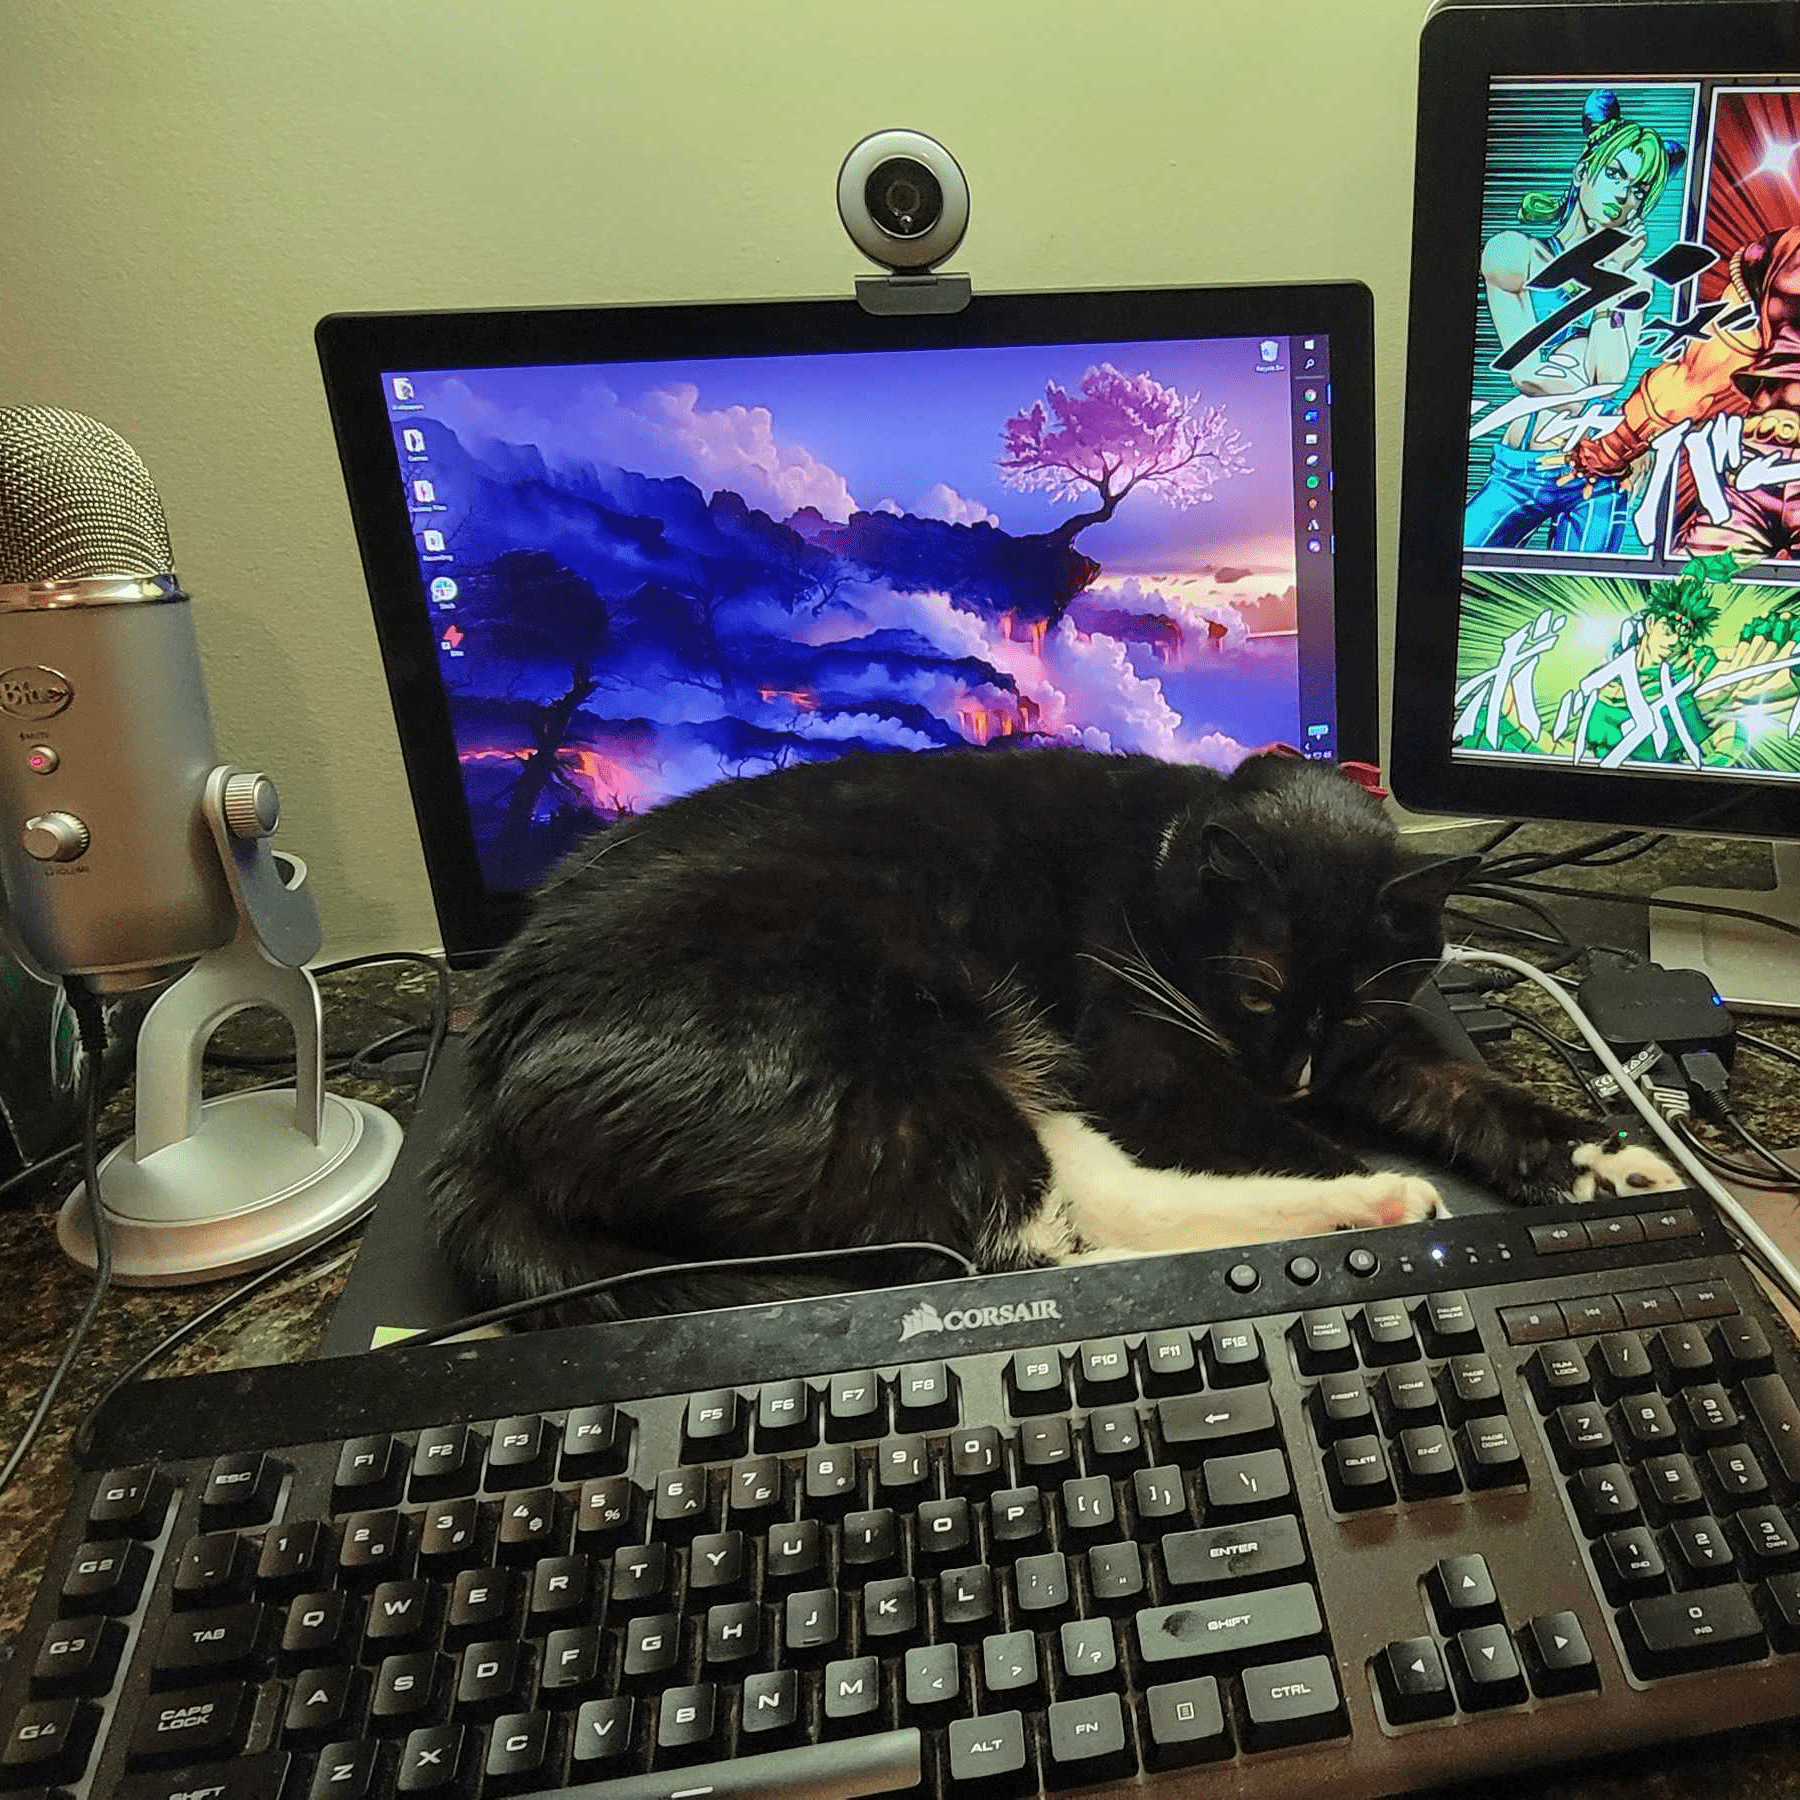 Zelda the cat naps on the desk